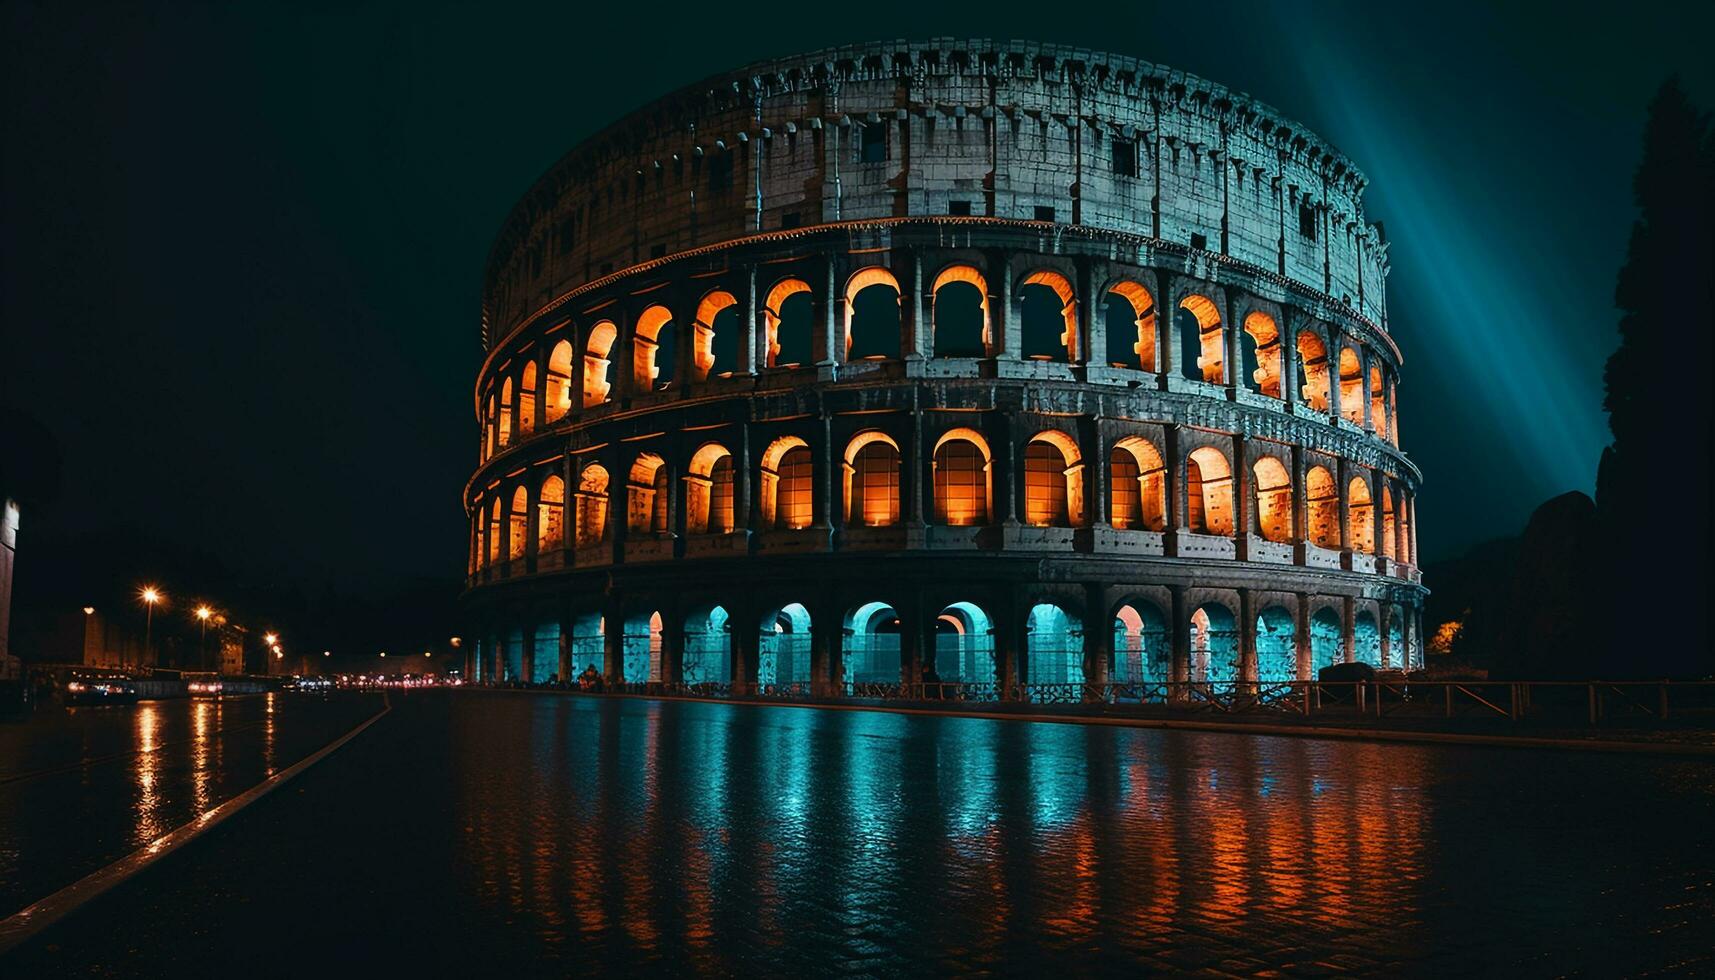 Illuminated arches reflect on water, ancient history illuminated generated by AI photo